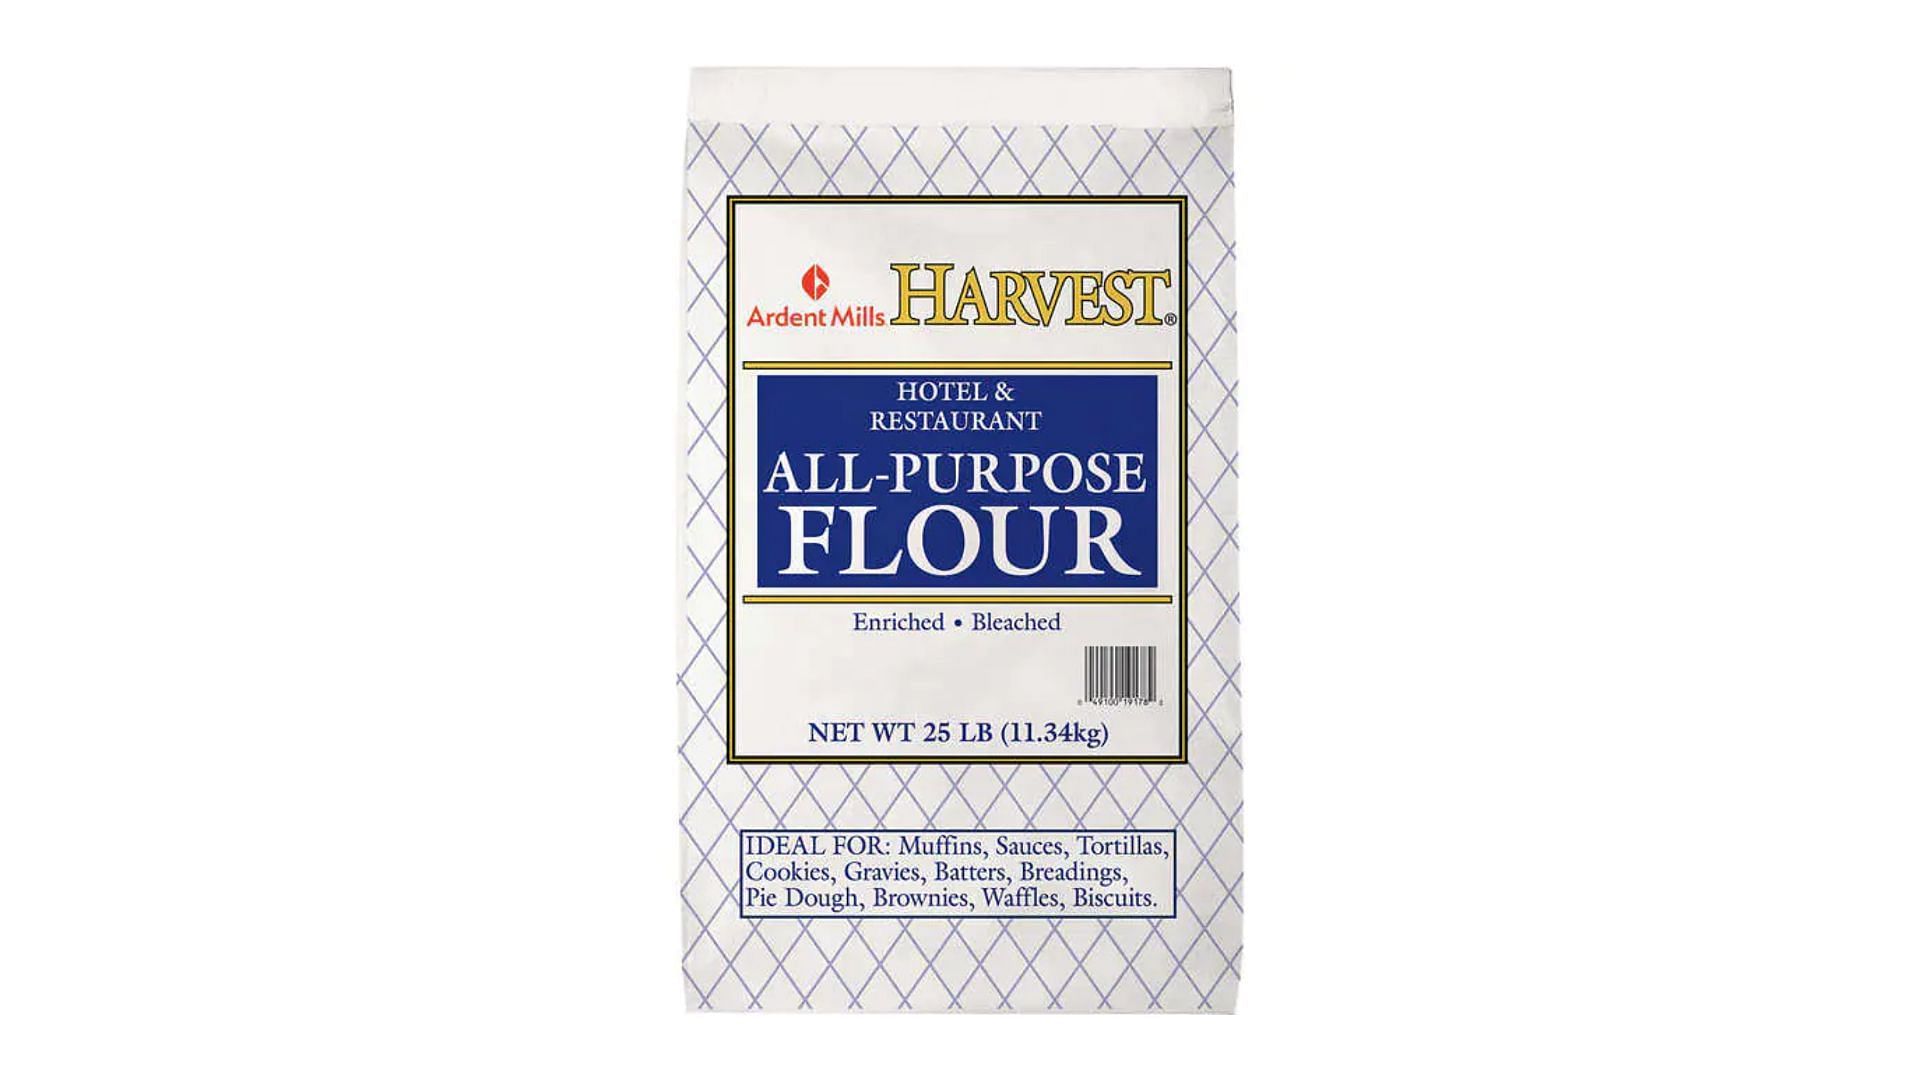 Ardent Mills Harvest Hotel & Restaurant All-Purpose Flour, 25 lbs (Image via Costco)